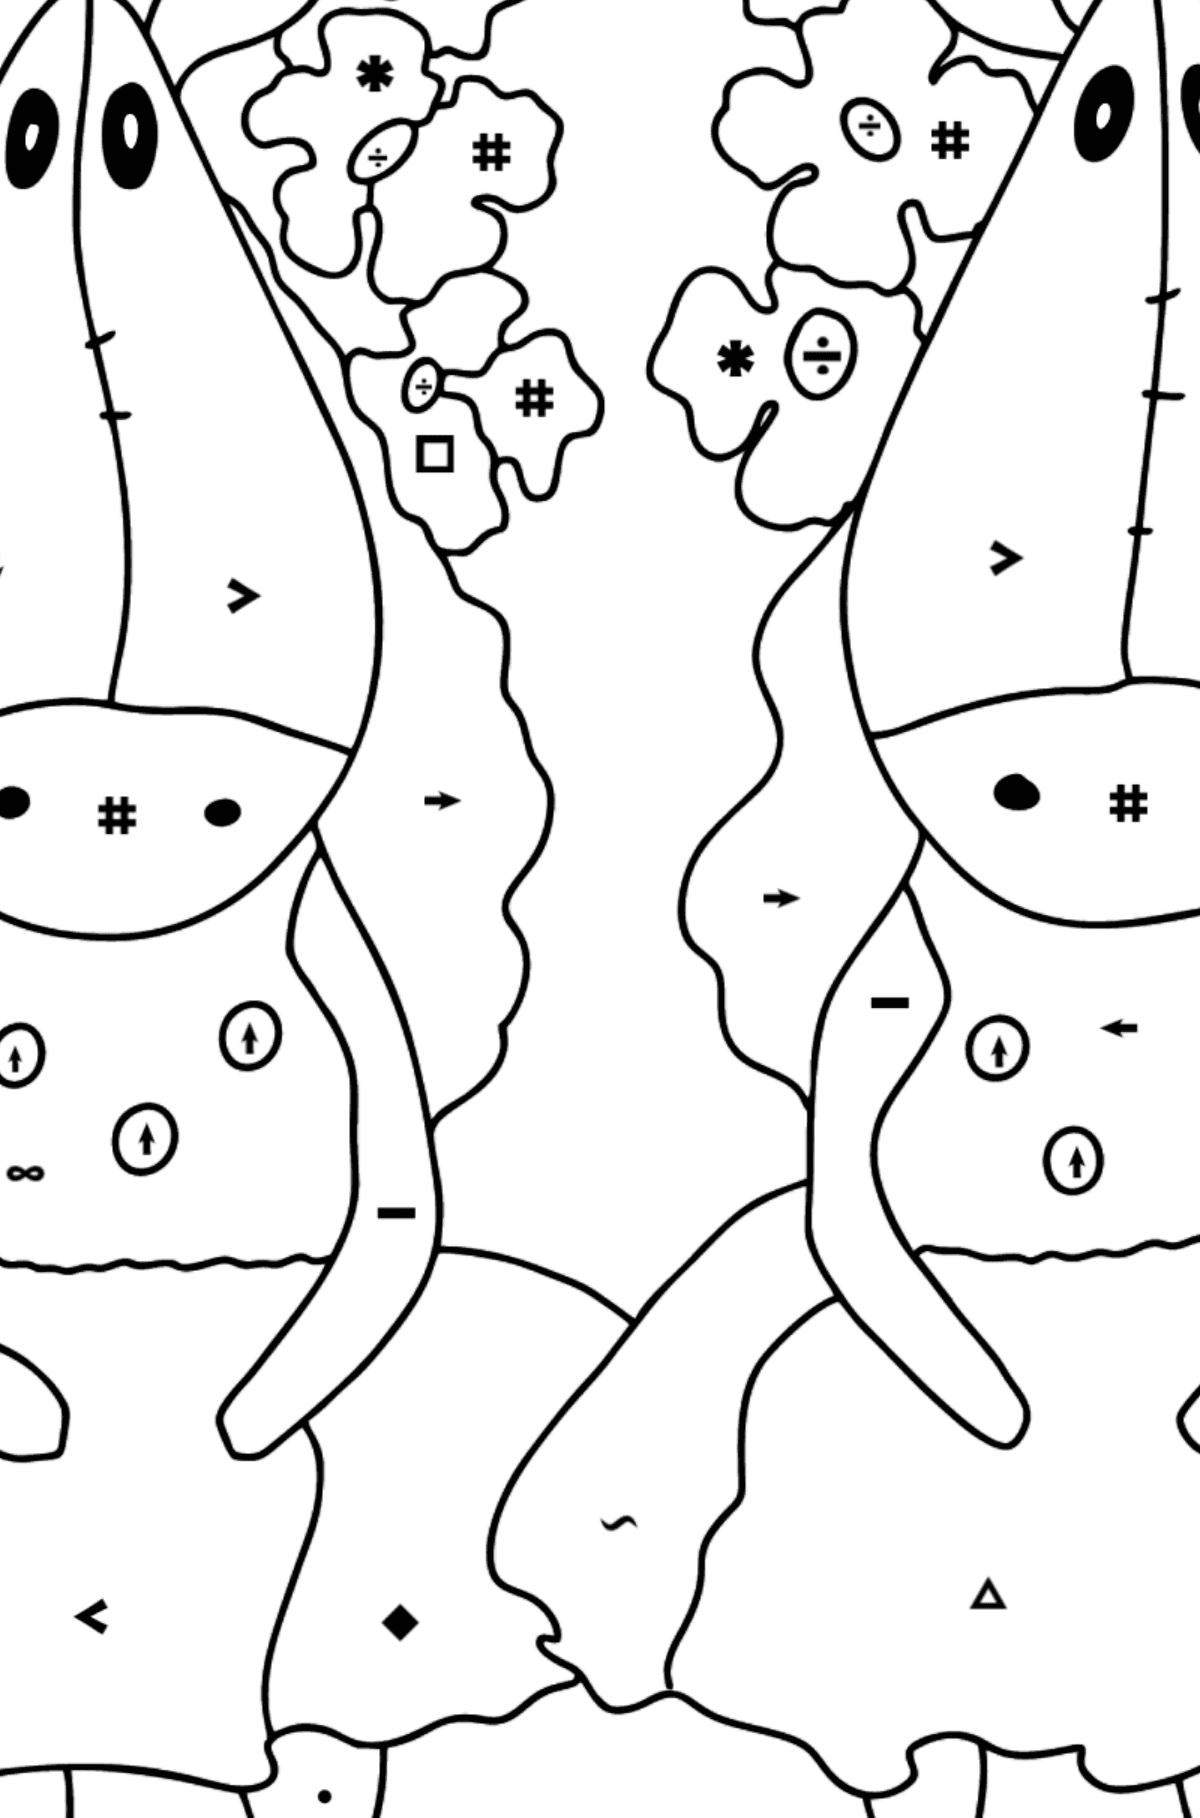 Розмальовка Парочка Коней (складно) - Розмальовки за символами для дітей